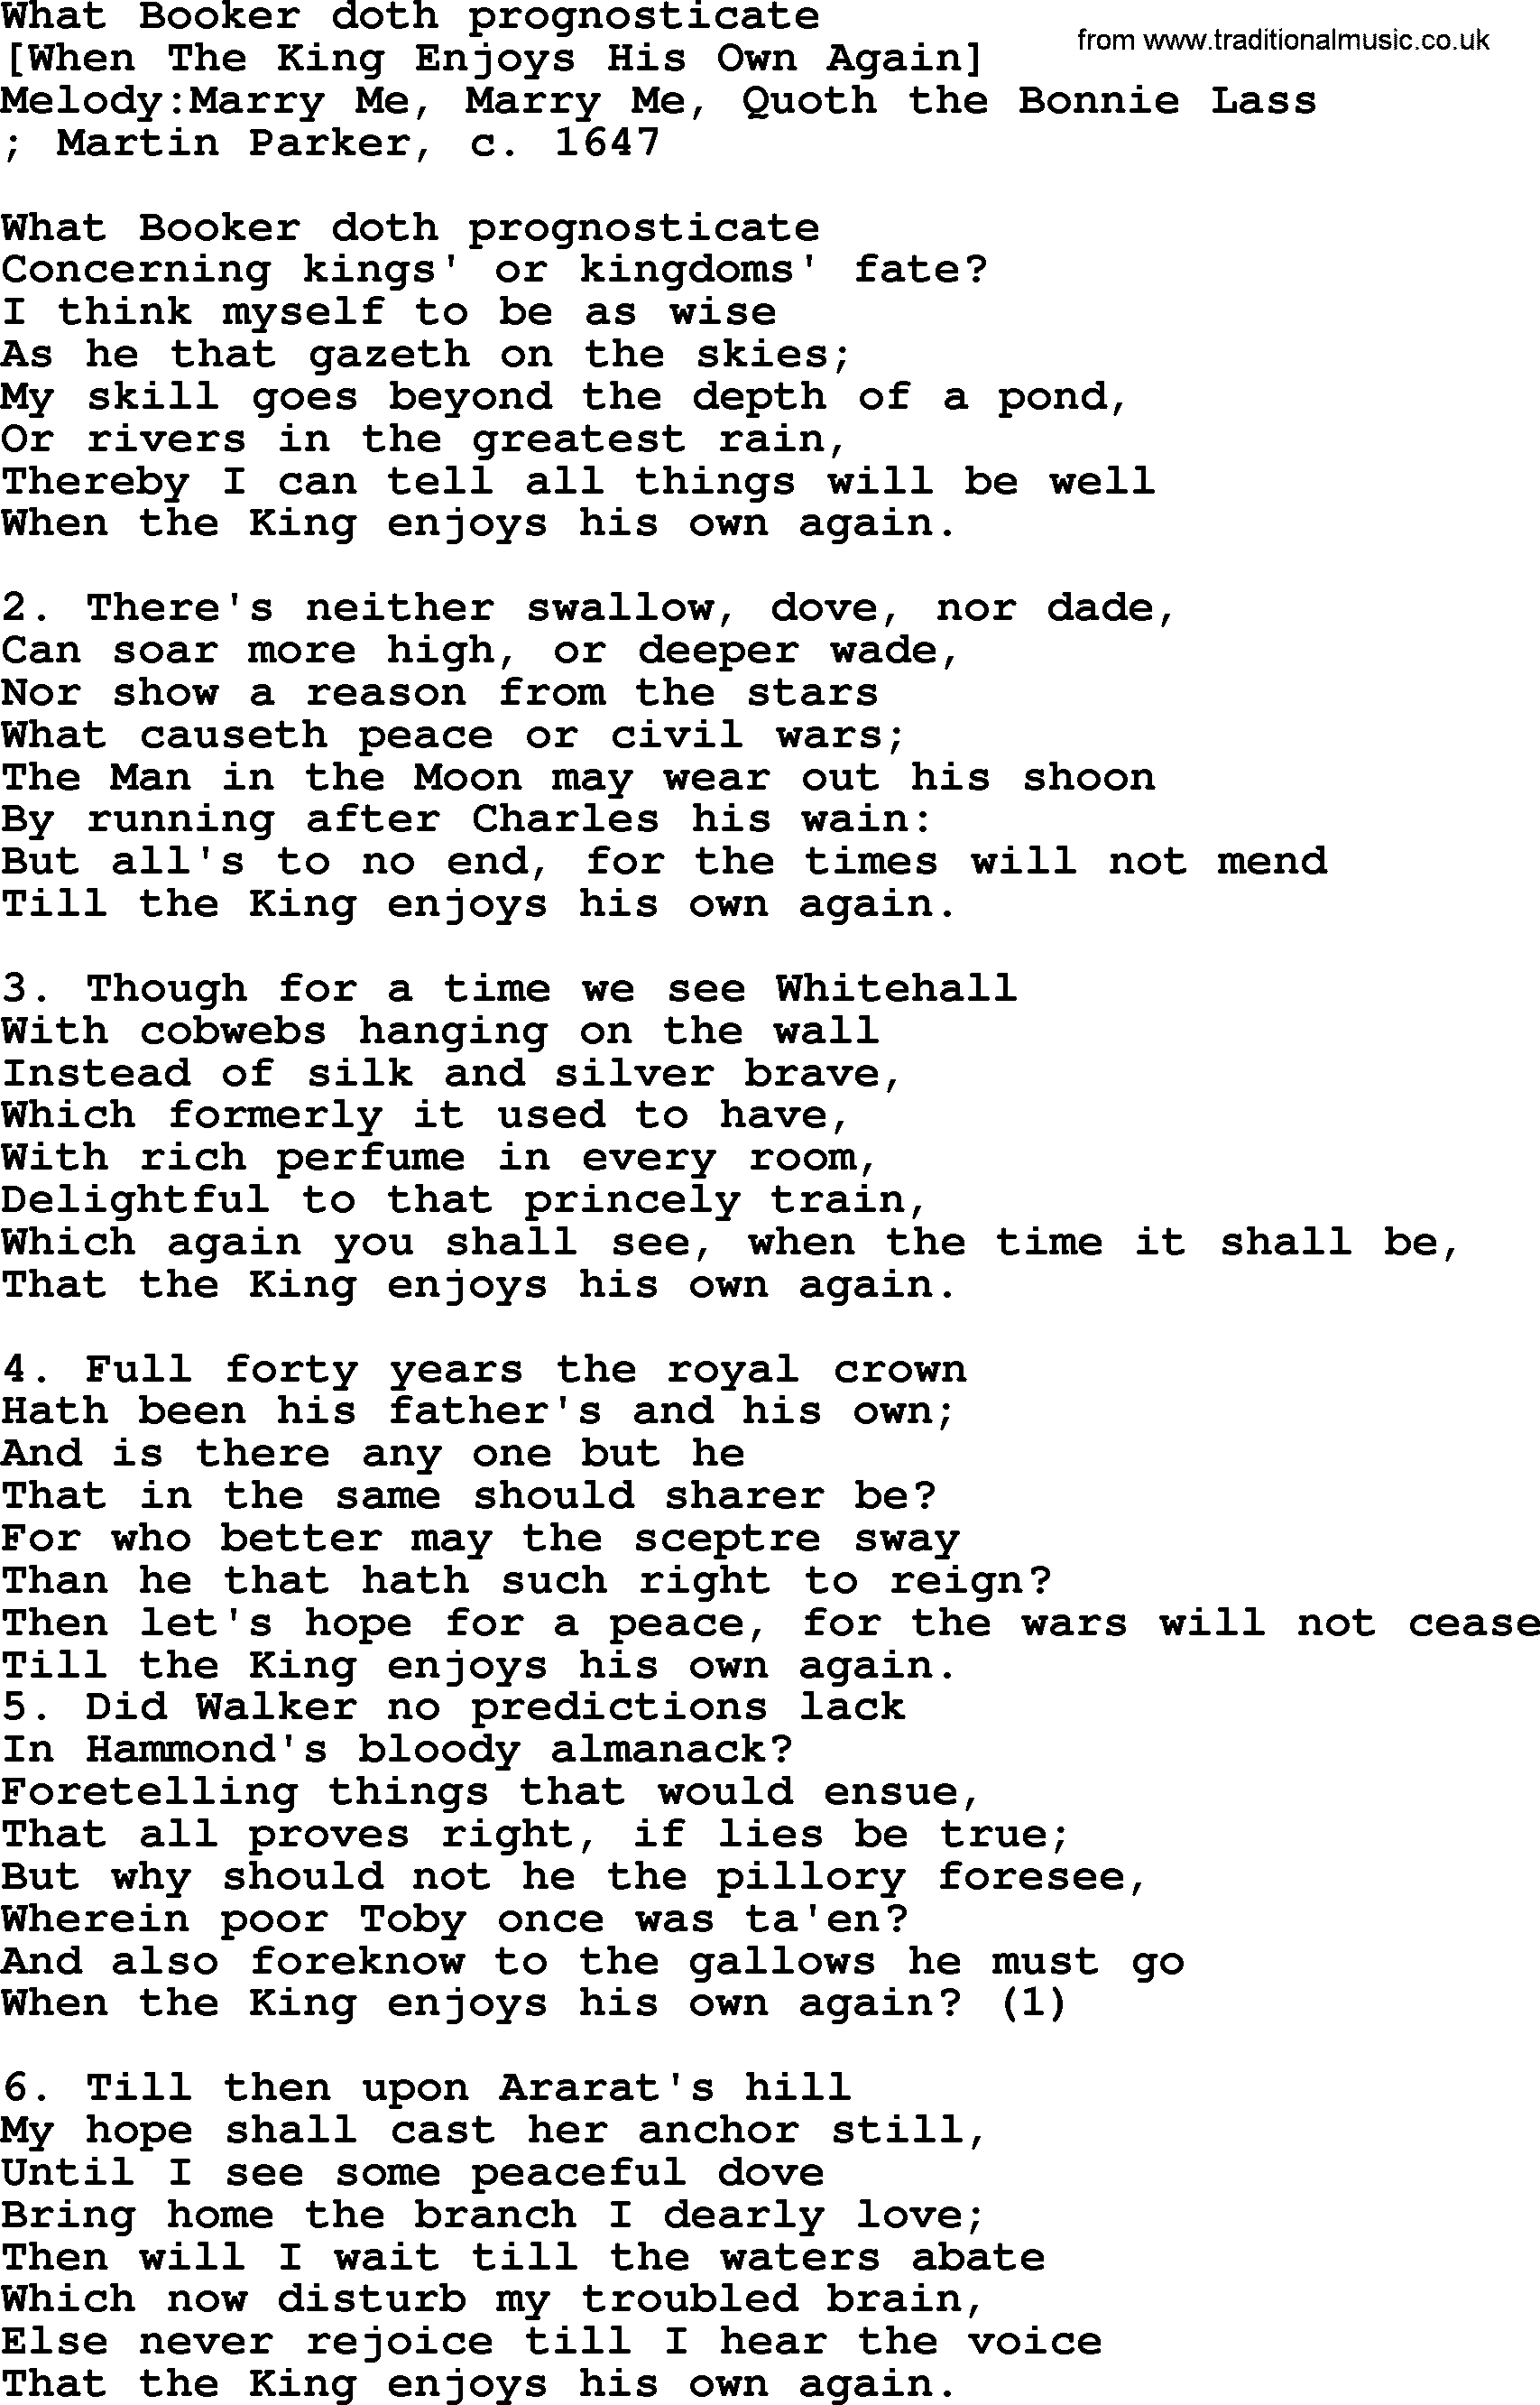 Old English Song: What Booker Doth Prognosticate lyrics